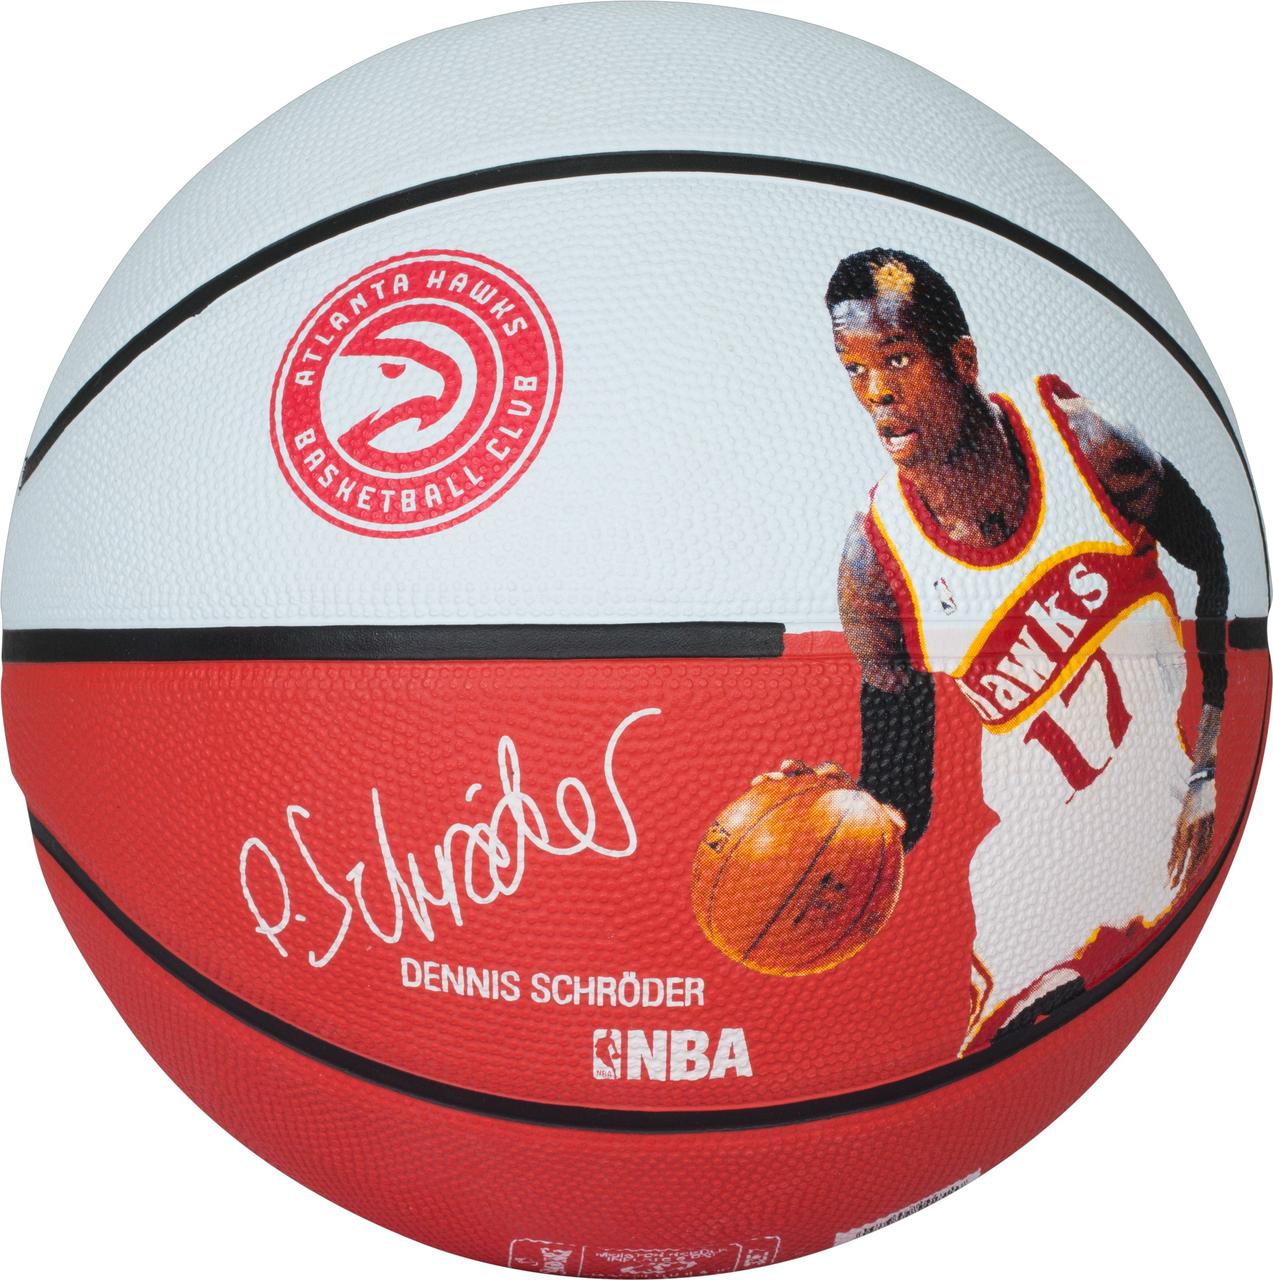 М'яч баскетбольний Spalding NBA Player Dennis Schroeder Size 7 гумовий для гри на вулиці в стритбол